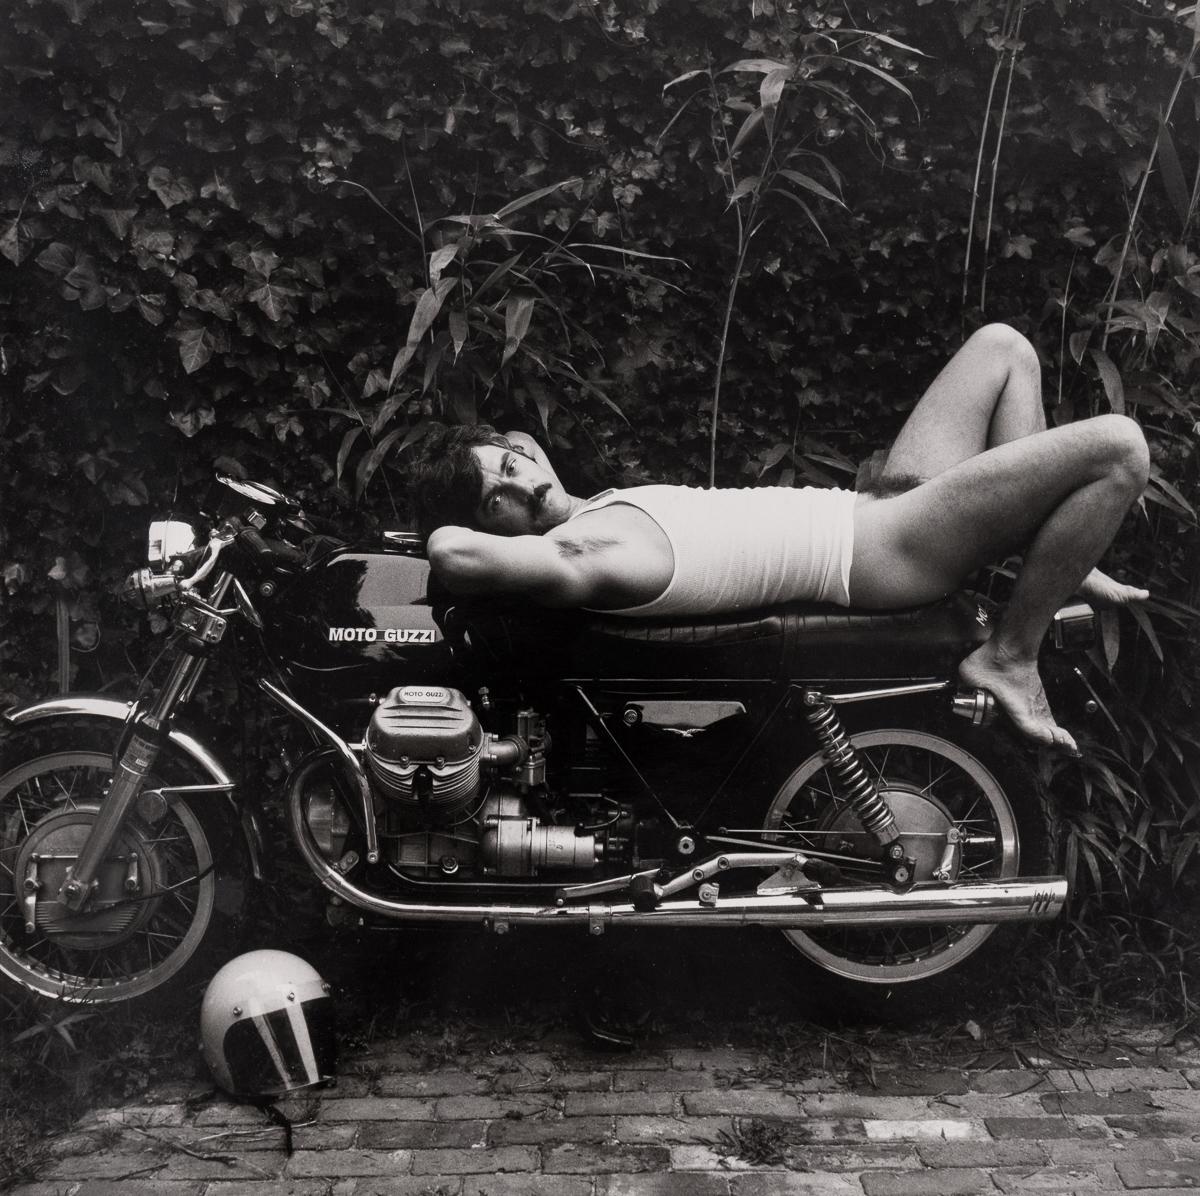 Robert Giard Nude Photograph - Man on Motorcycle